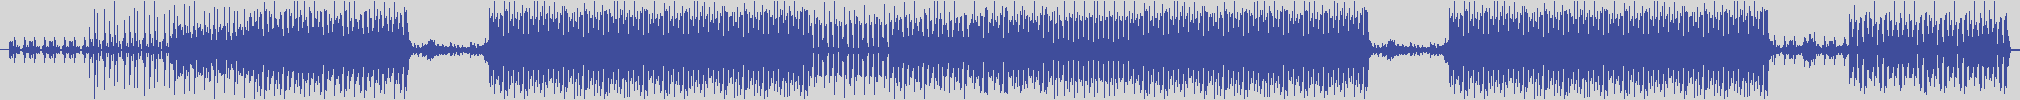 nf_boyz_records [NFY038] Apologetic Shroom - Arguing Lard [Original Mix] audio wave form